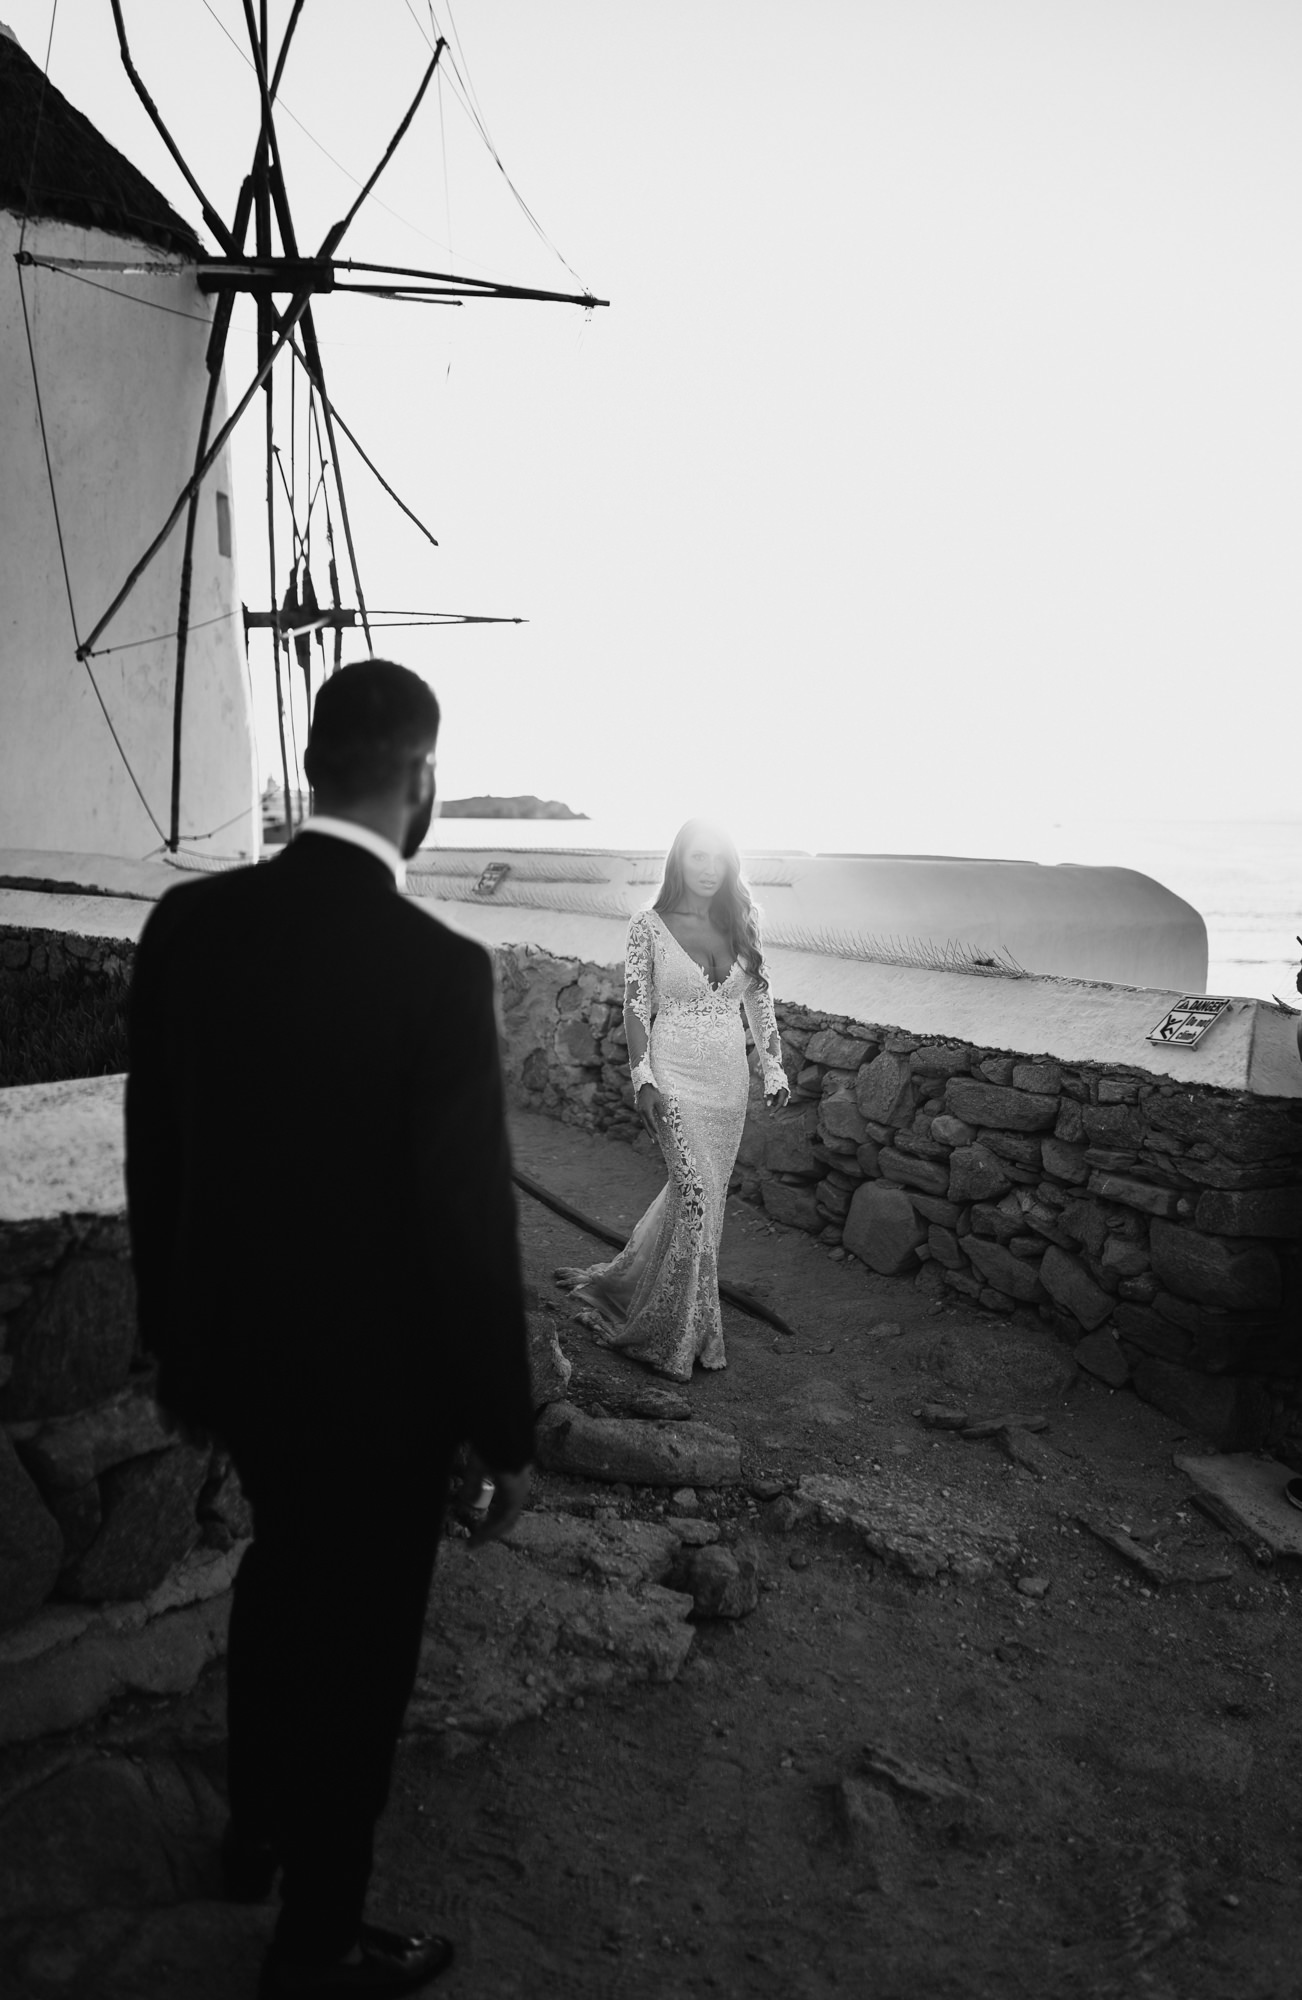 Professional wedding photography in Mykonos, Greece by Albatross